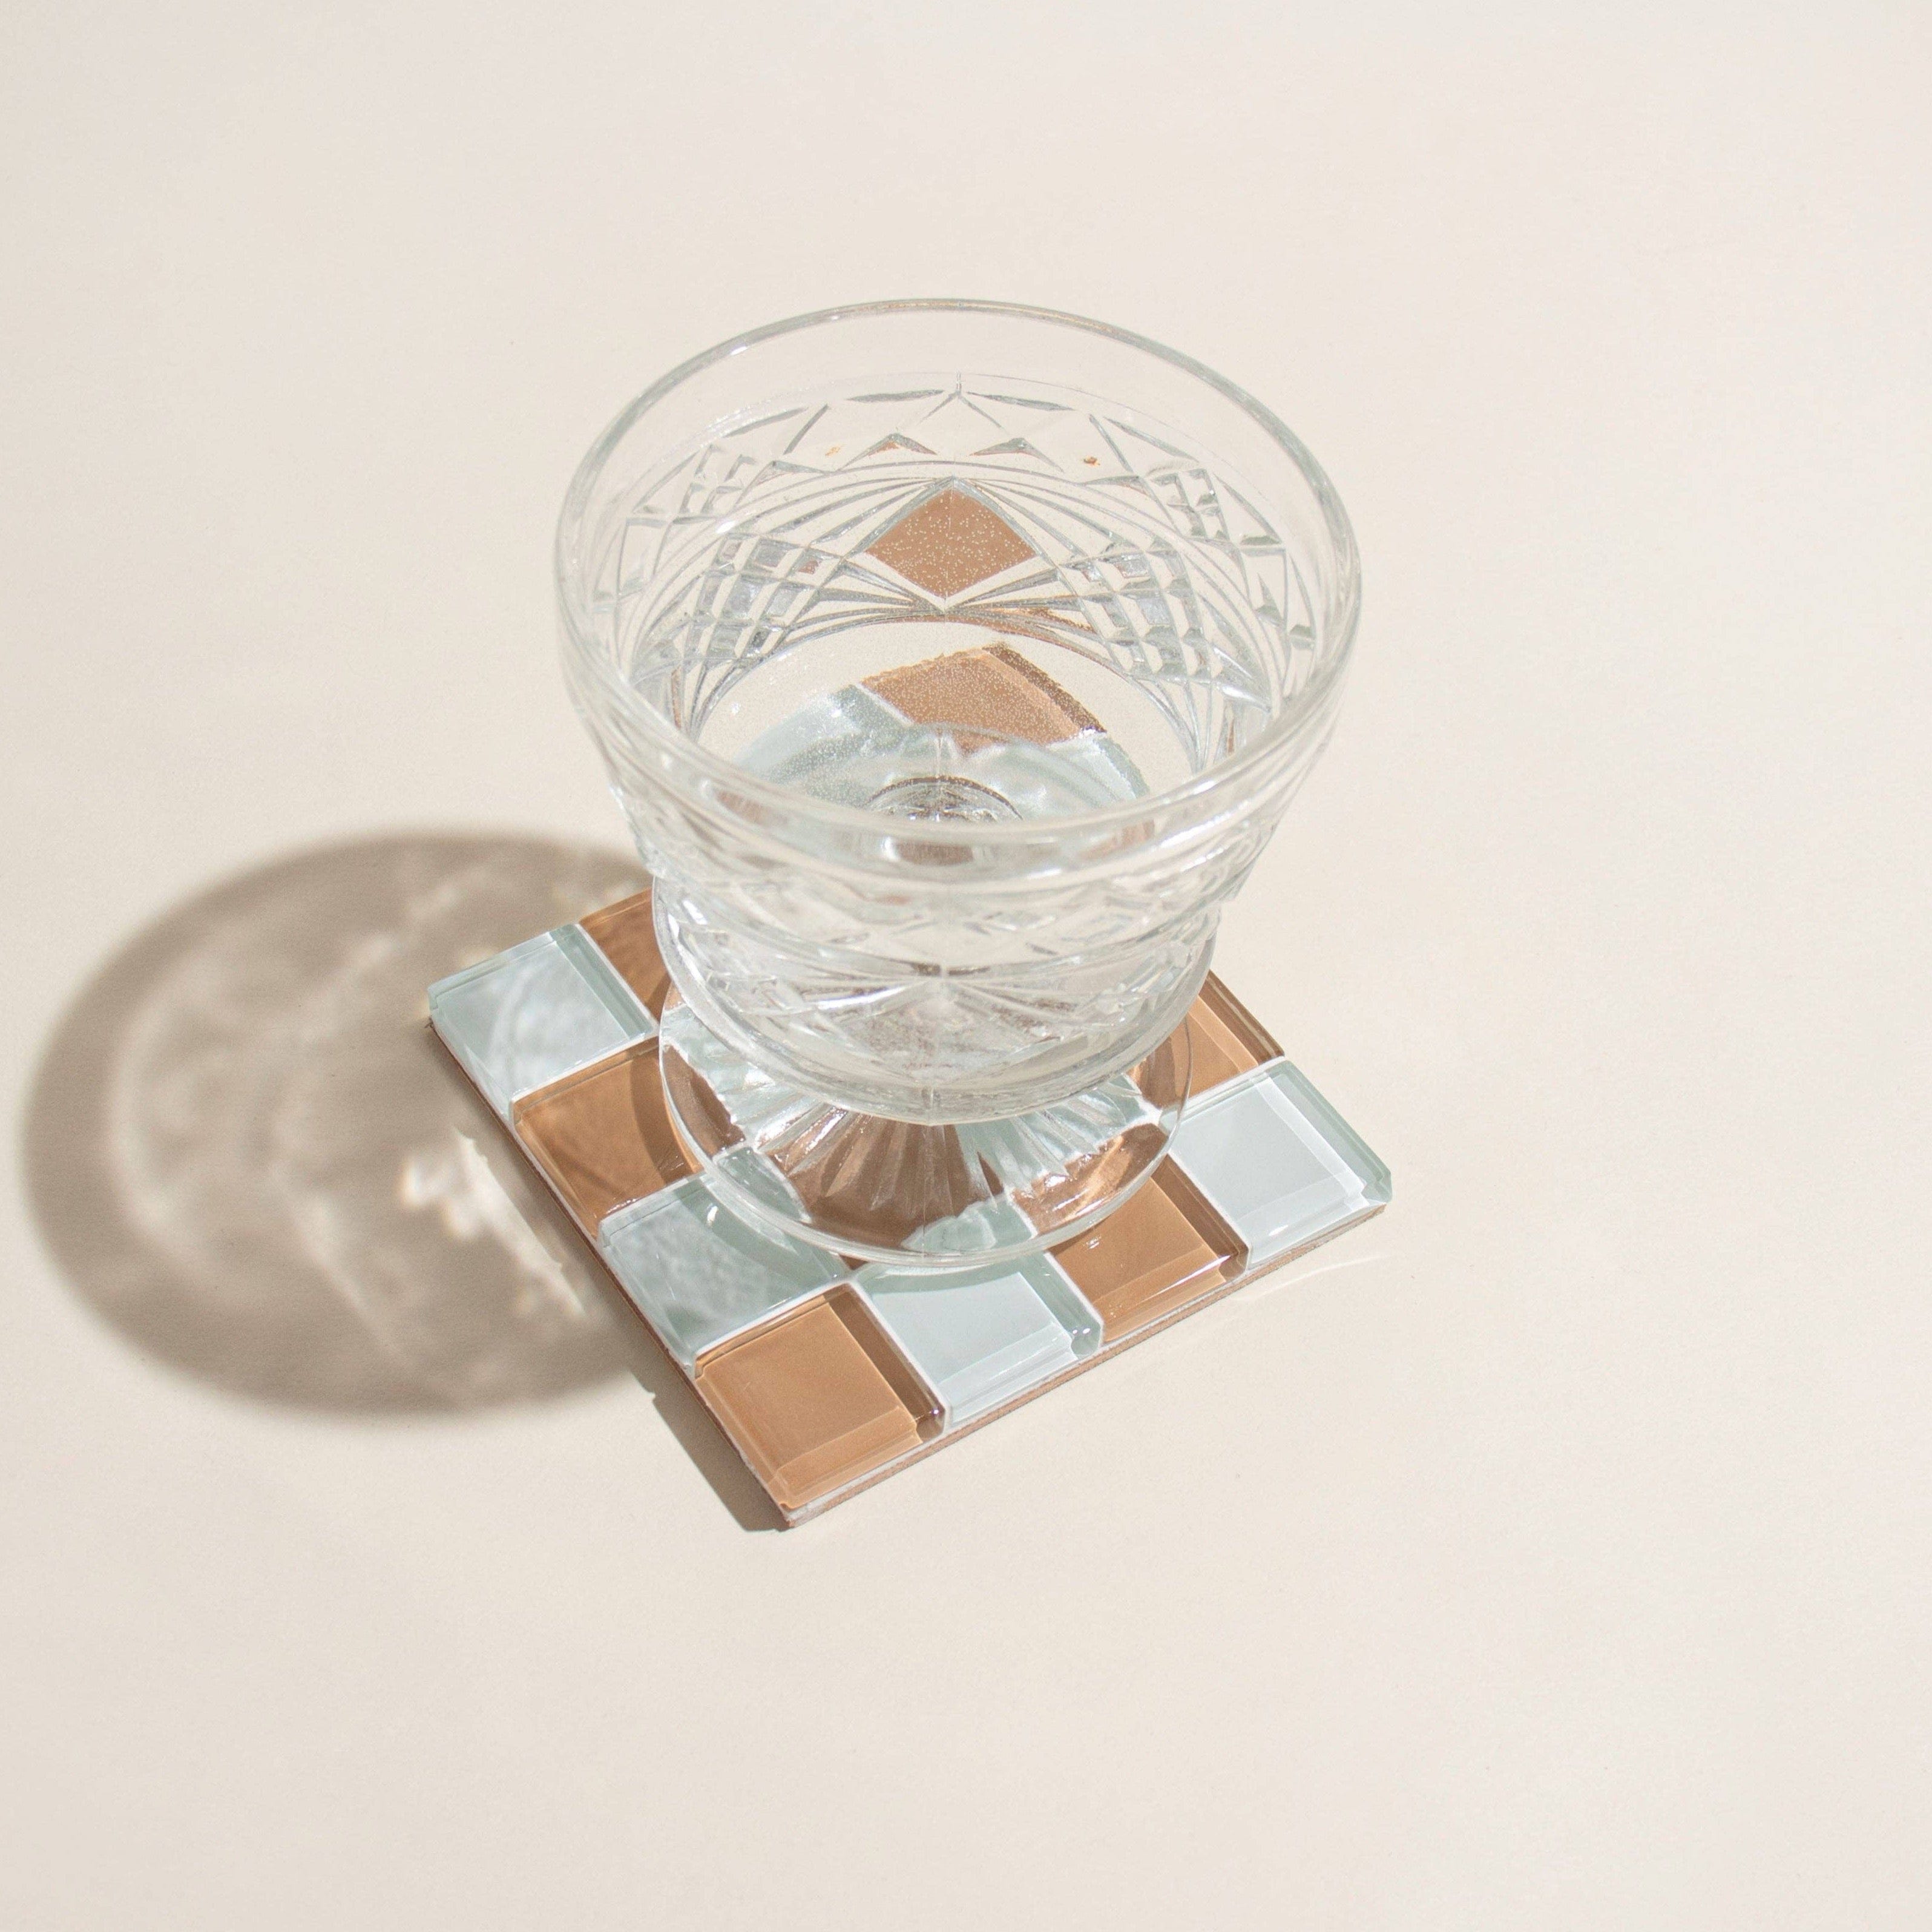 Glass Tile Coaster - Hazelnut Milk Chocolate by Subtle Art Studios